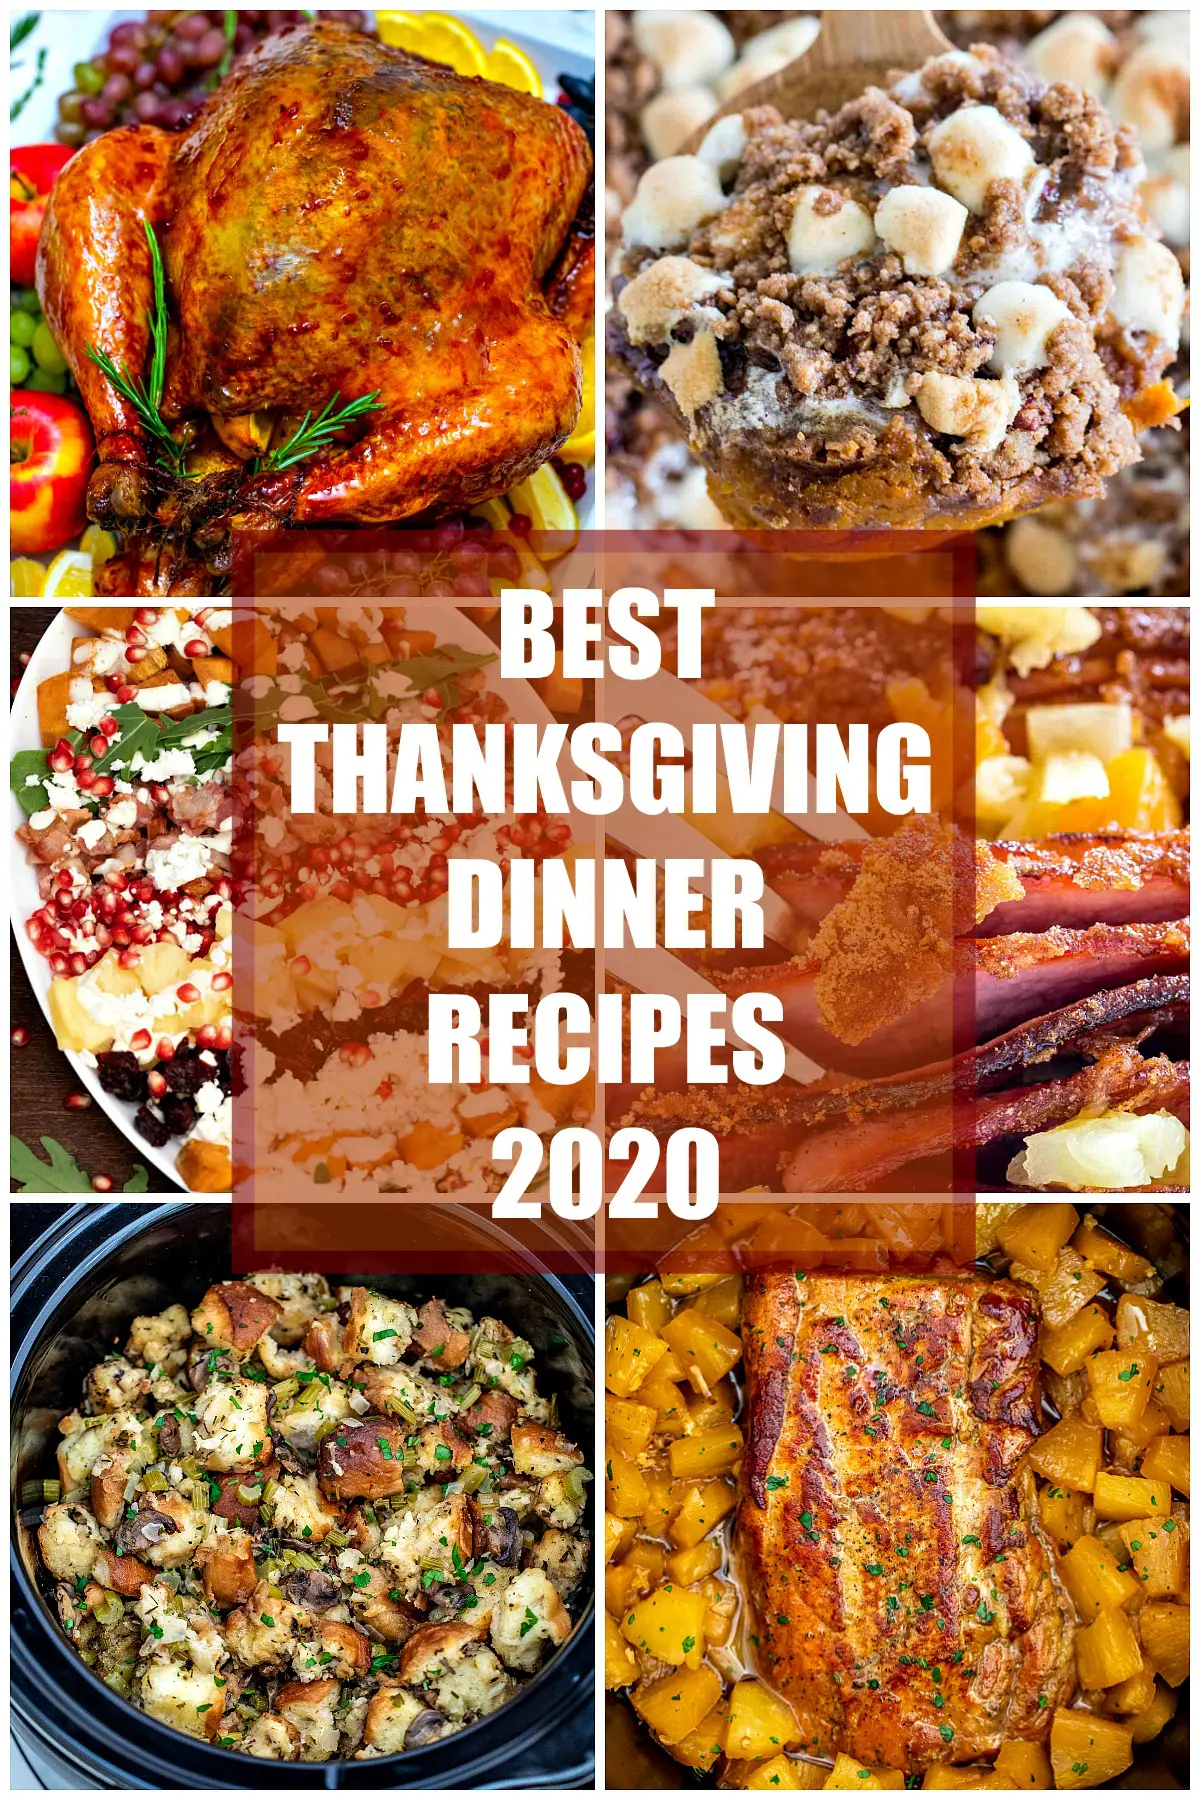 Best Thanksgiving Dinner Recipes 